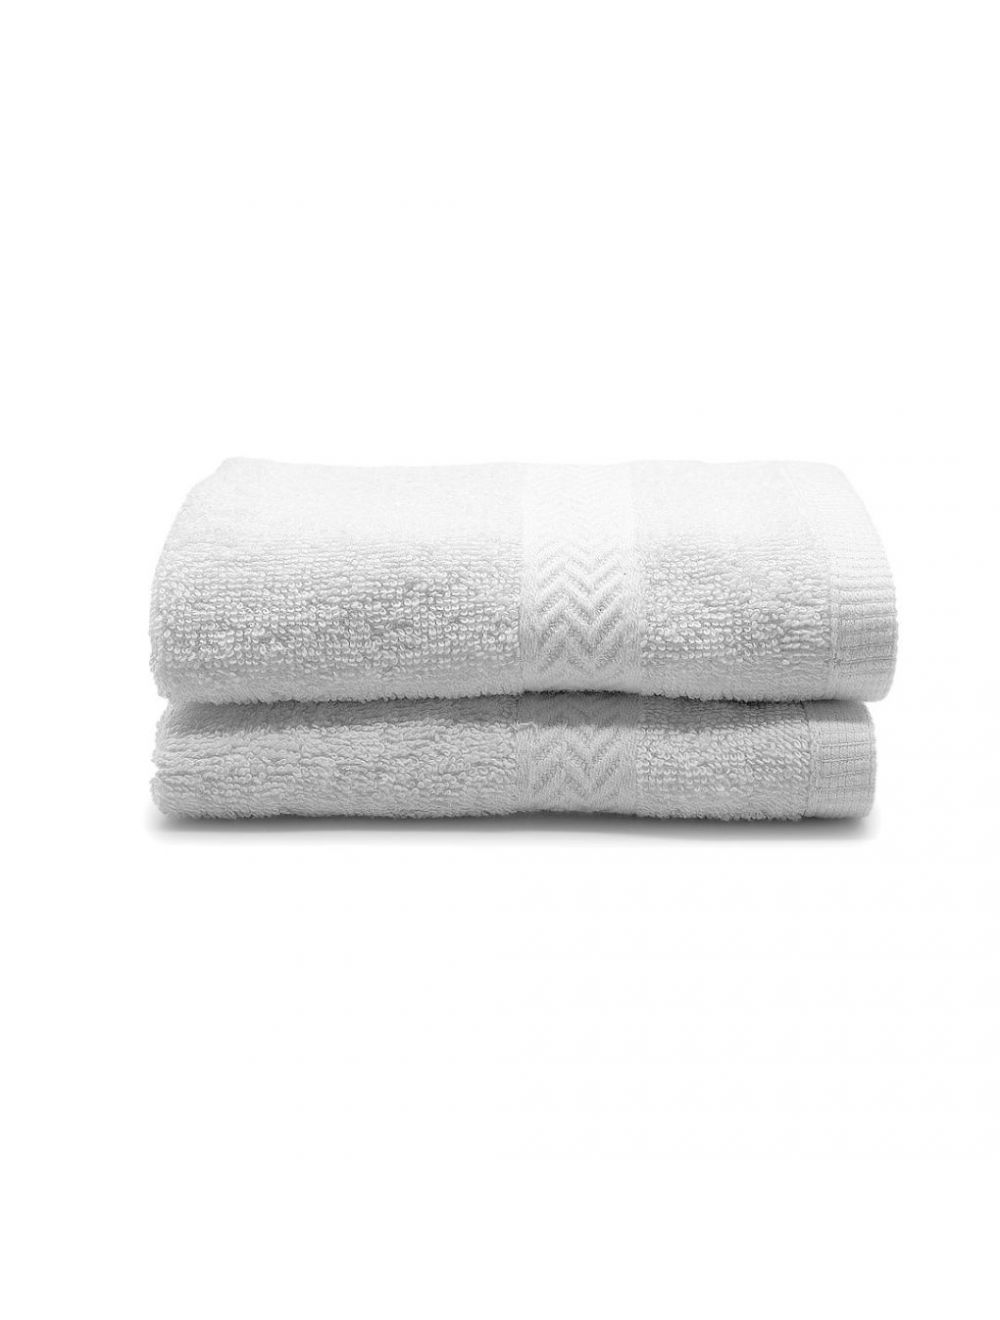 Rishahome 100% Cotton 2-Piece Bath Towel Set, Premium Collection, White-14RHWFT048